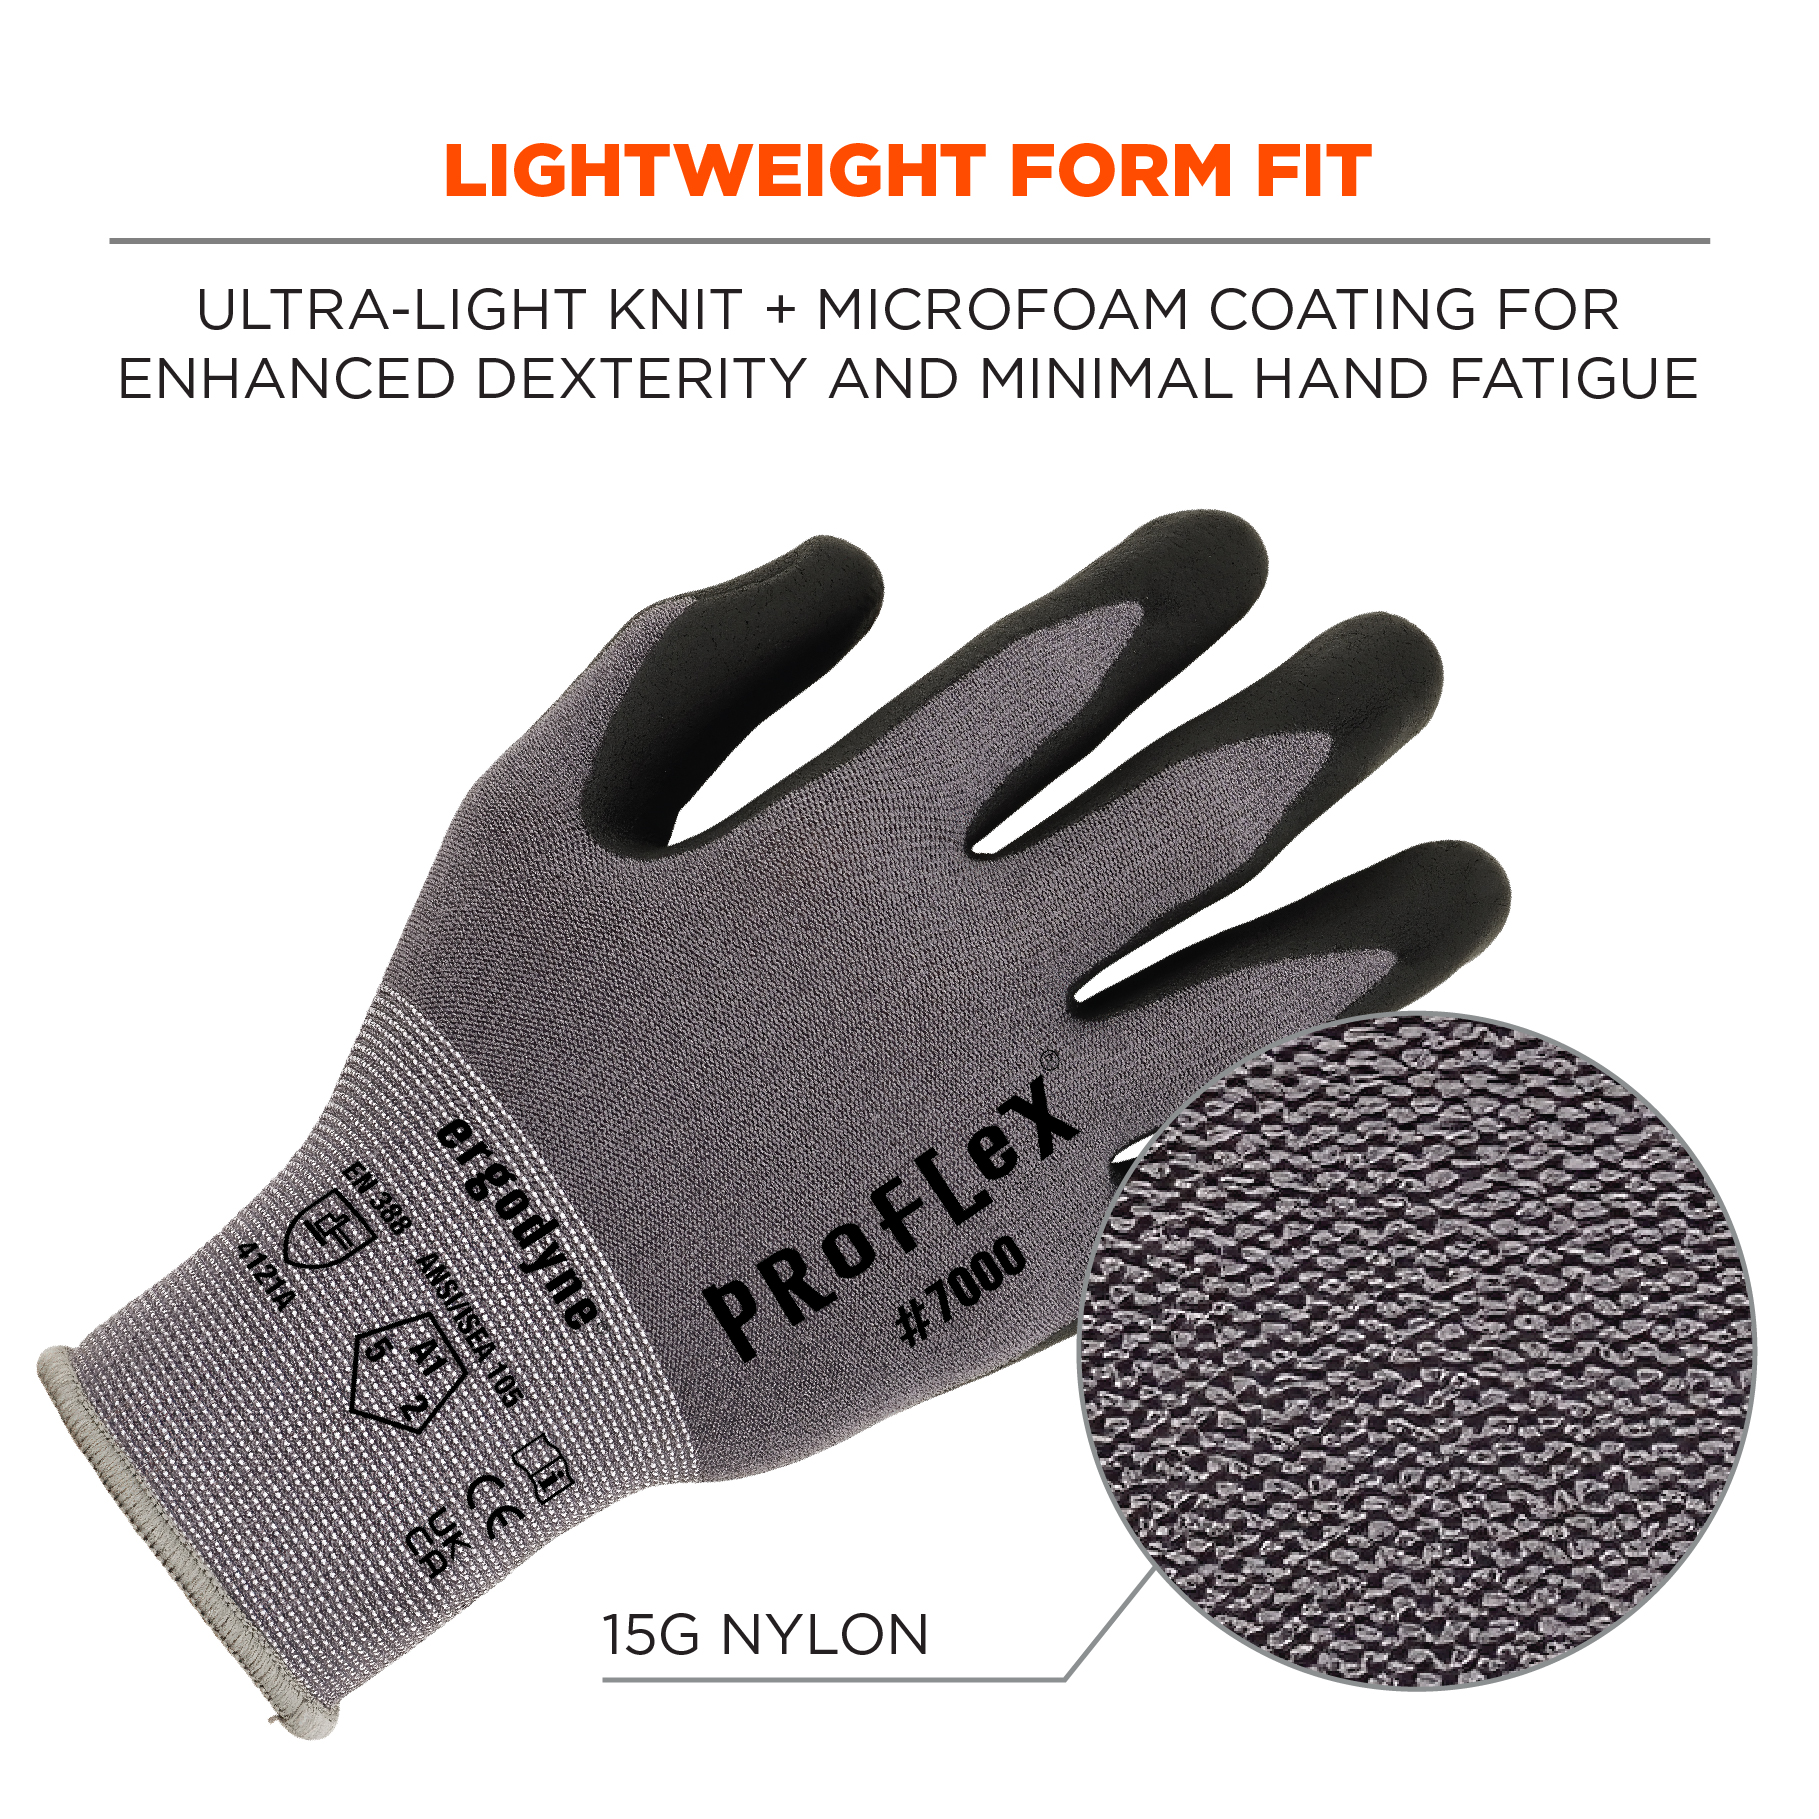 https://www.ergodyne.com/sites/default/files/product-images/10371-7000-nitrile-coated-gloves-microfoam-palm-gray-lightweight-form-fit_0.jpg